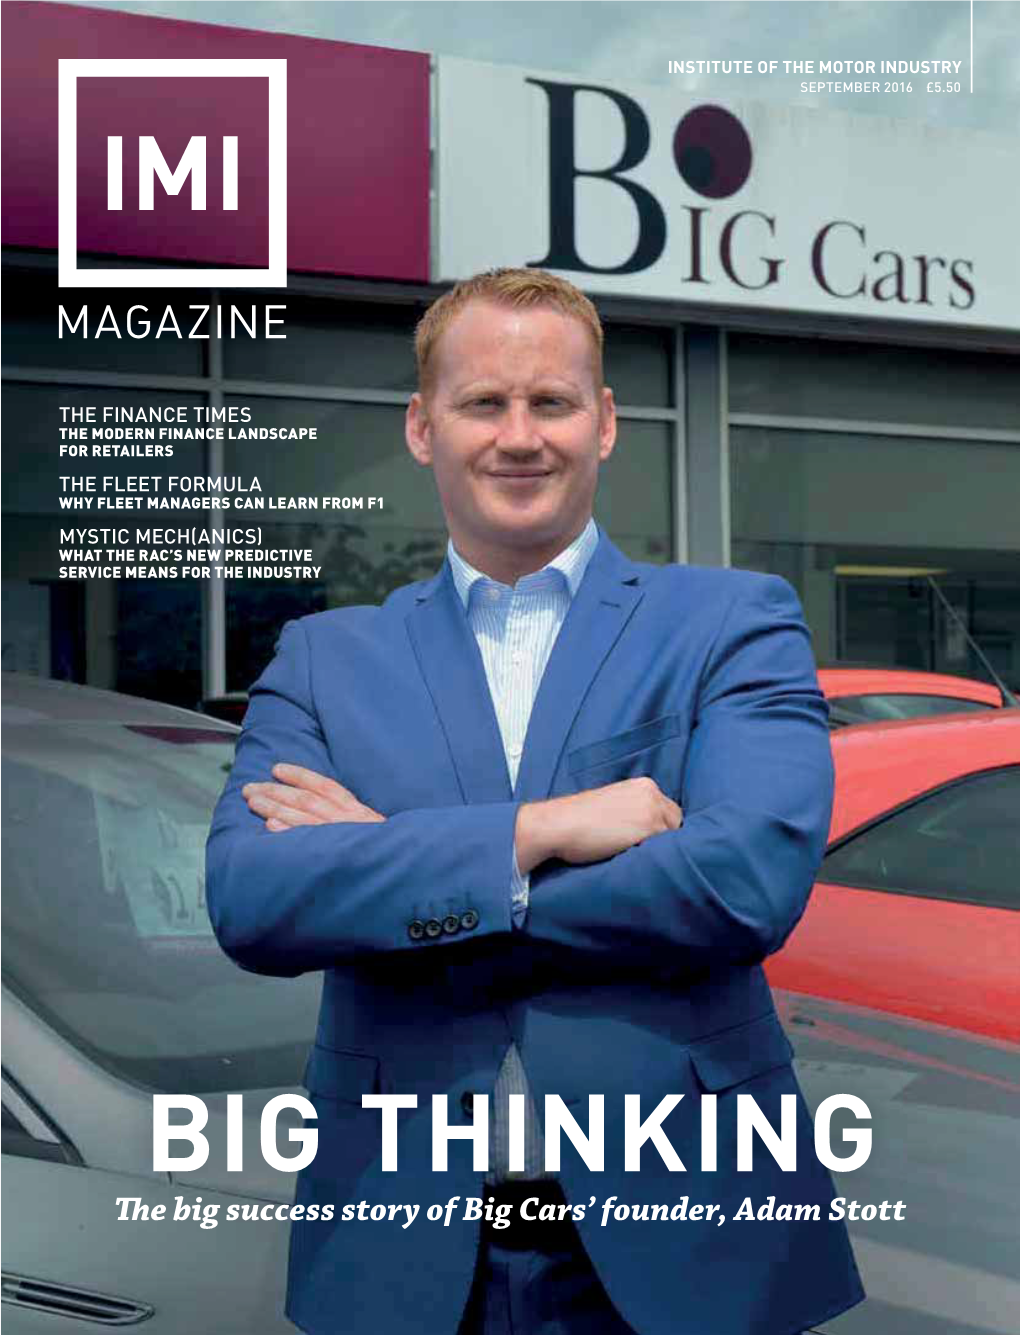 BIG THINKING the Big Success Story of Big Cars’ Founder, Adam Stott